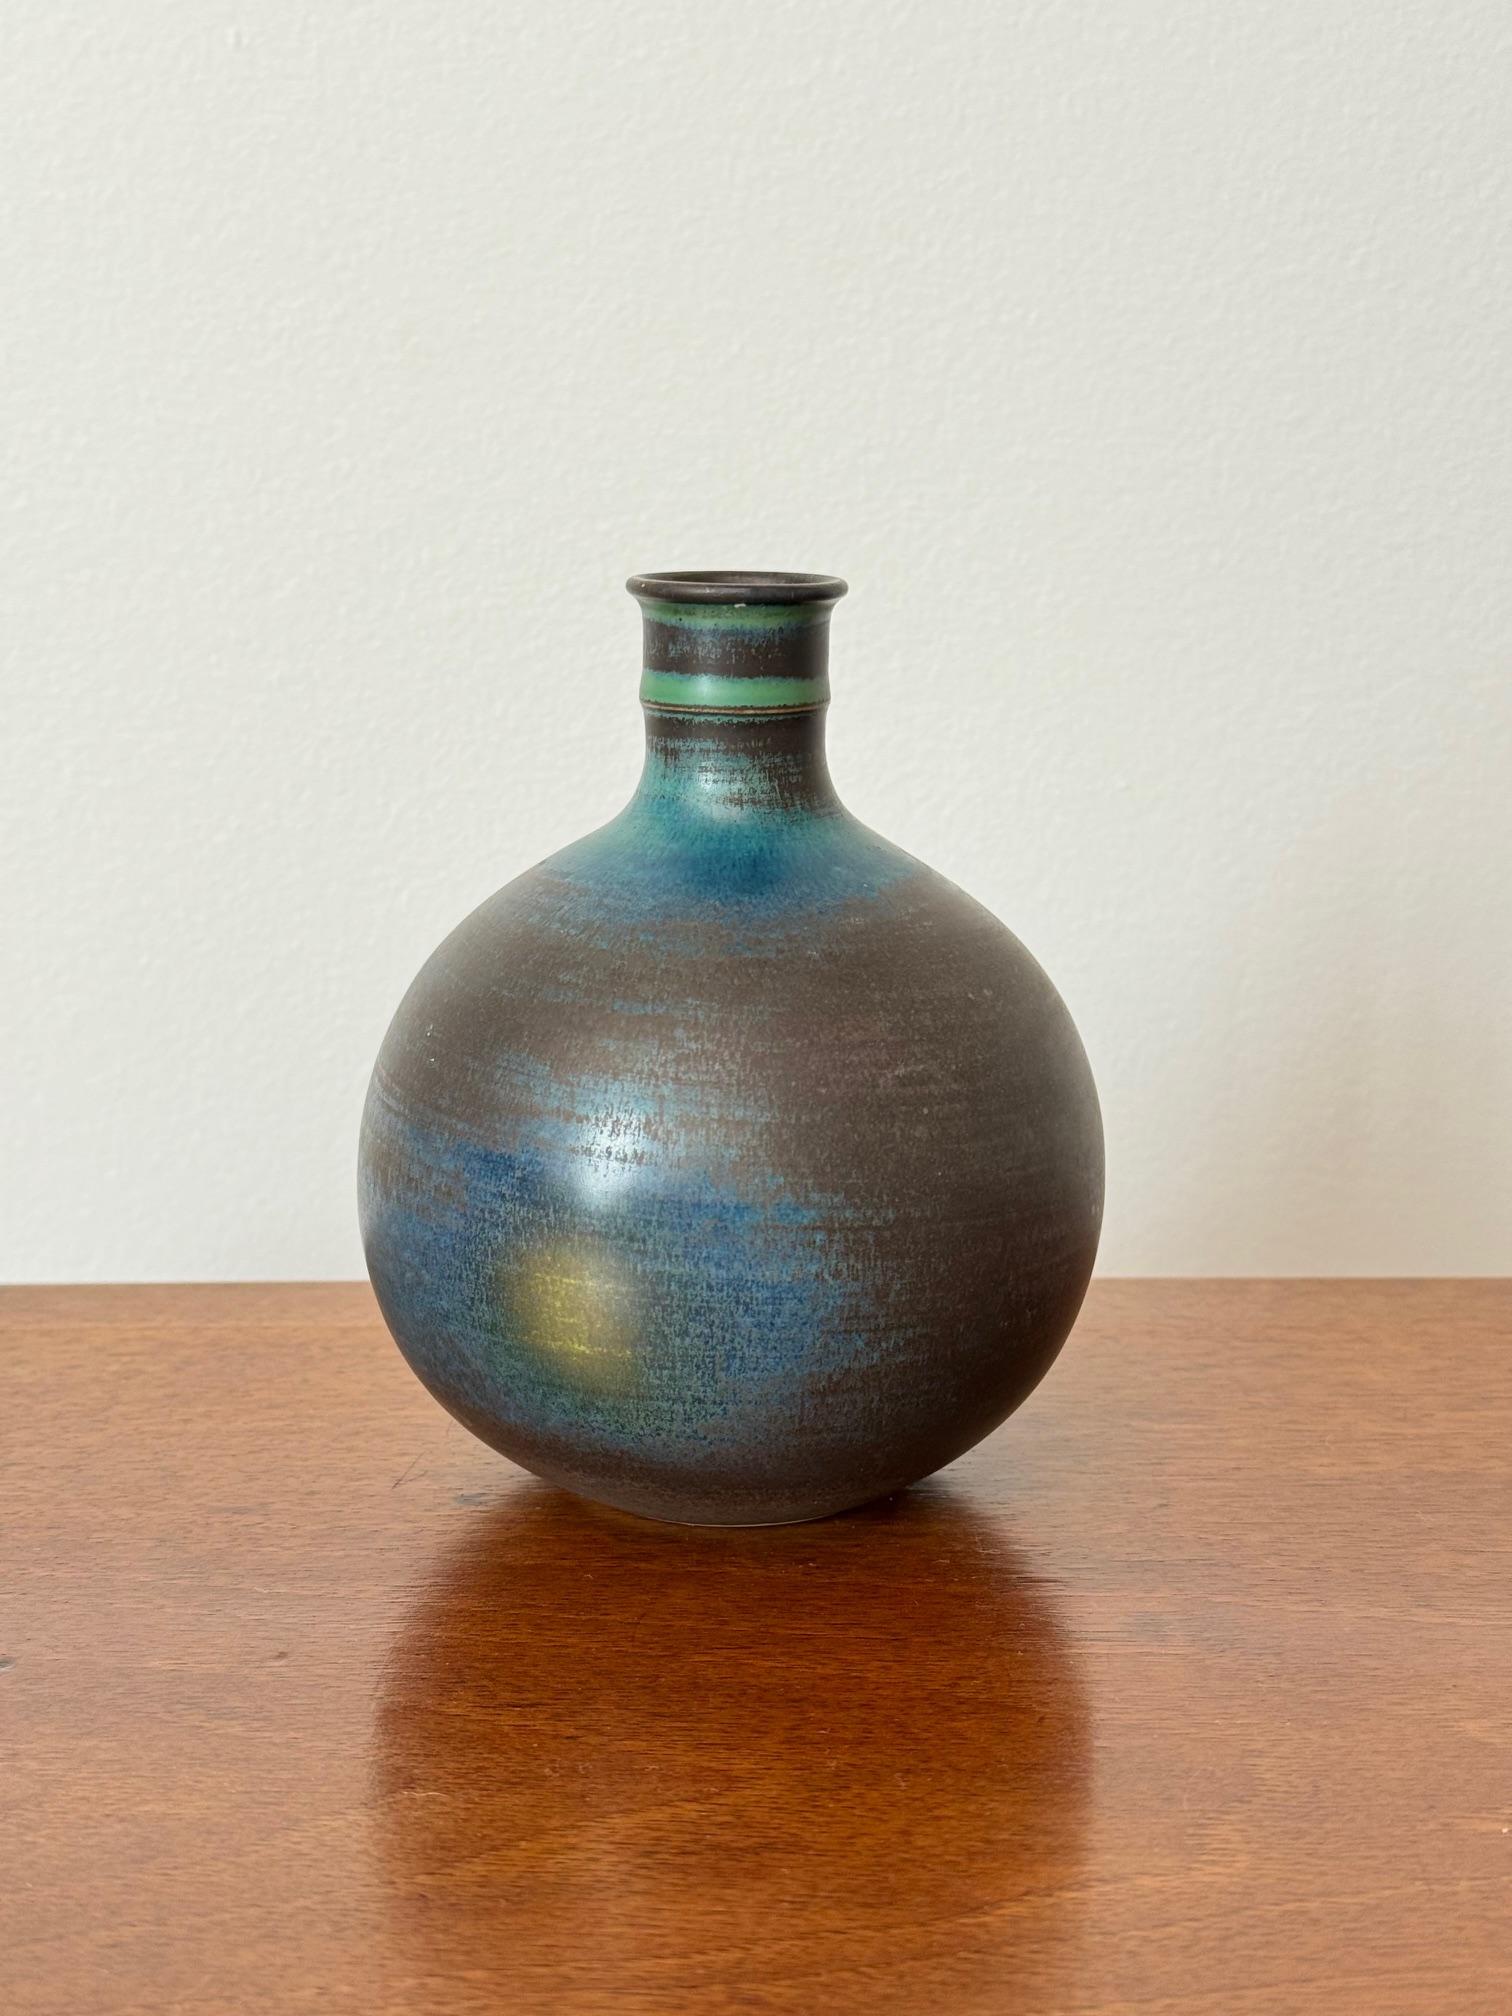 Stig Lindberg, (1916-1982)
Stoneware Vase with amazing glaze for Gustavsberg studio, 1950s, Sweden
Impressed 